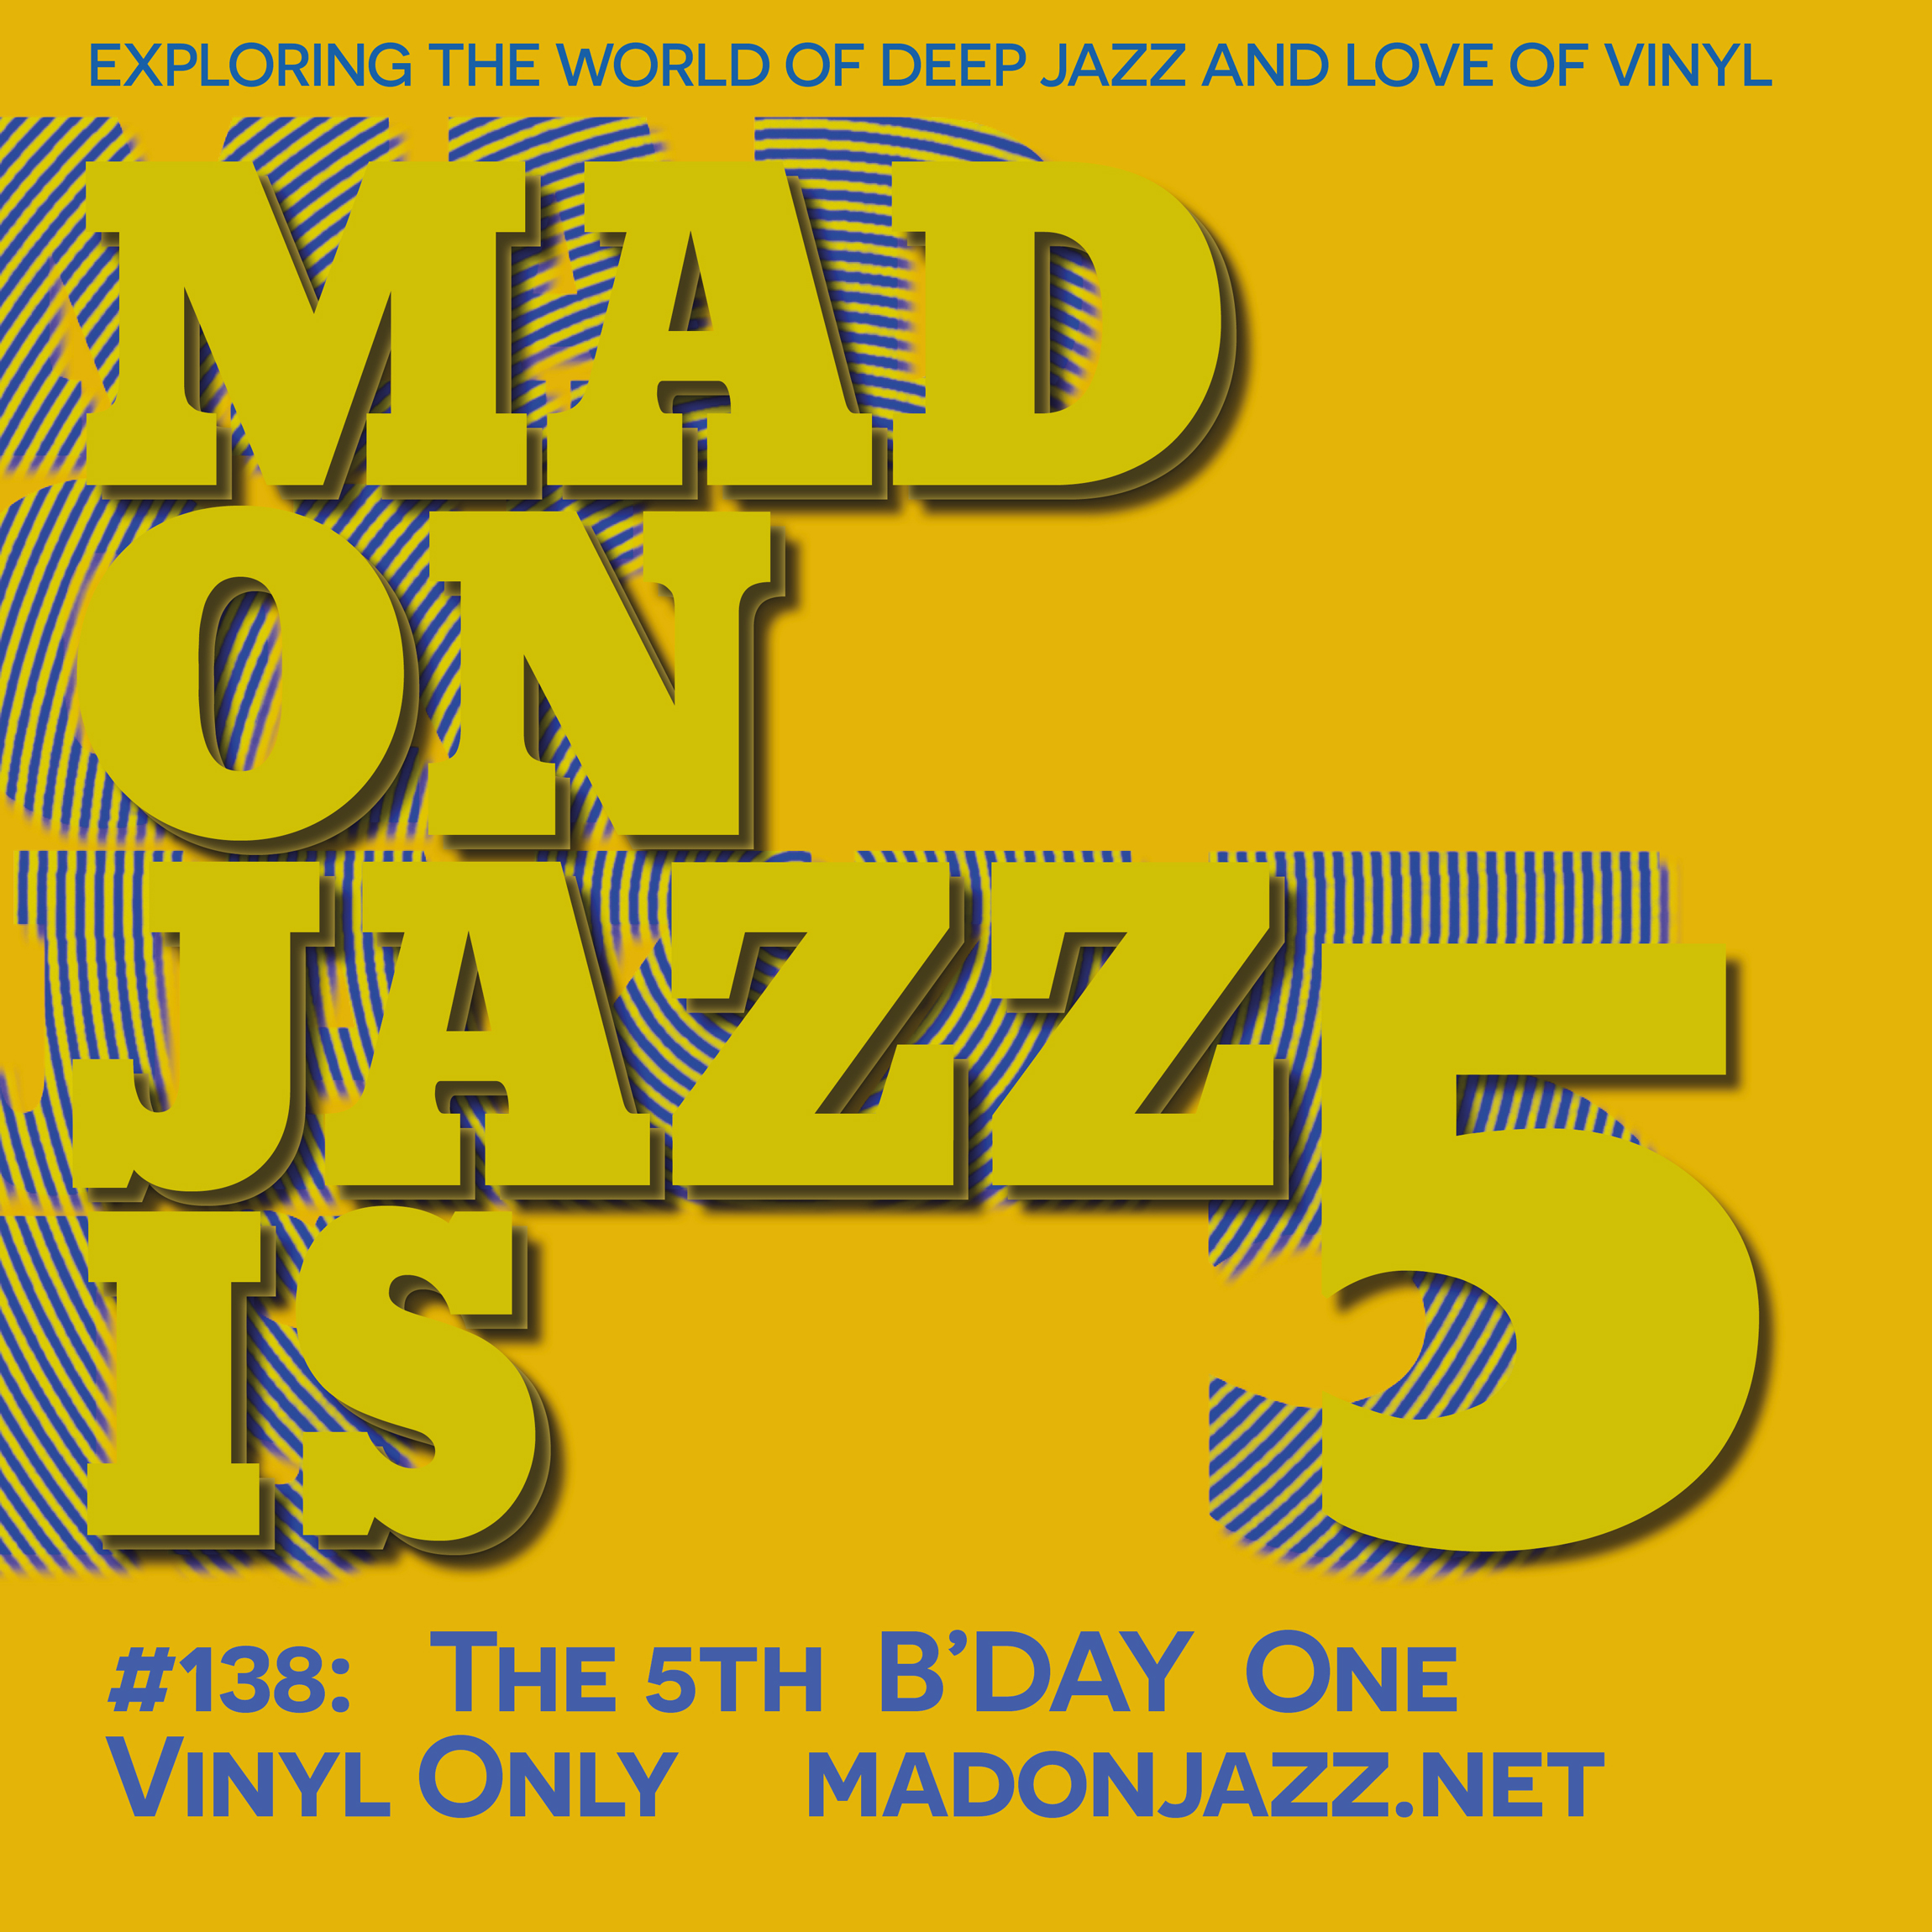 MADONJAZZ is Five! Avant-garde Deep Jazz Spiritual Jazz gems